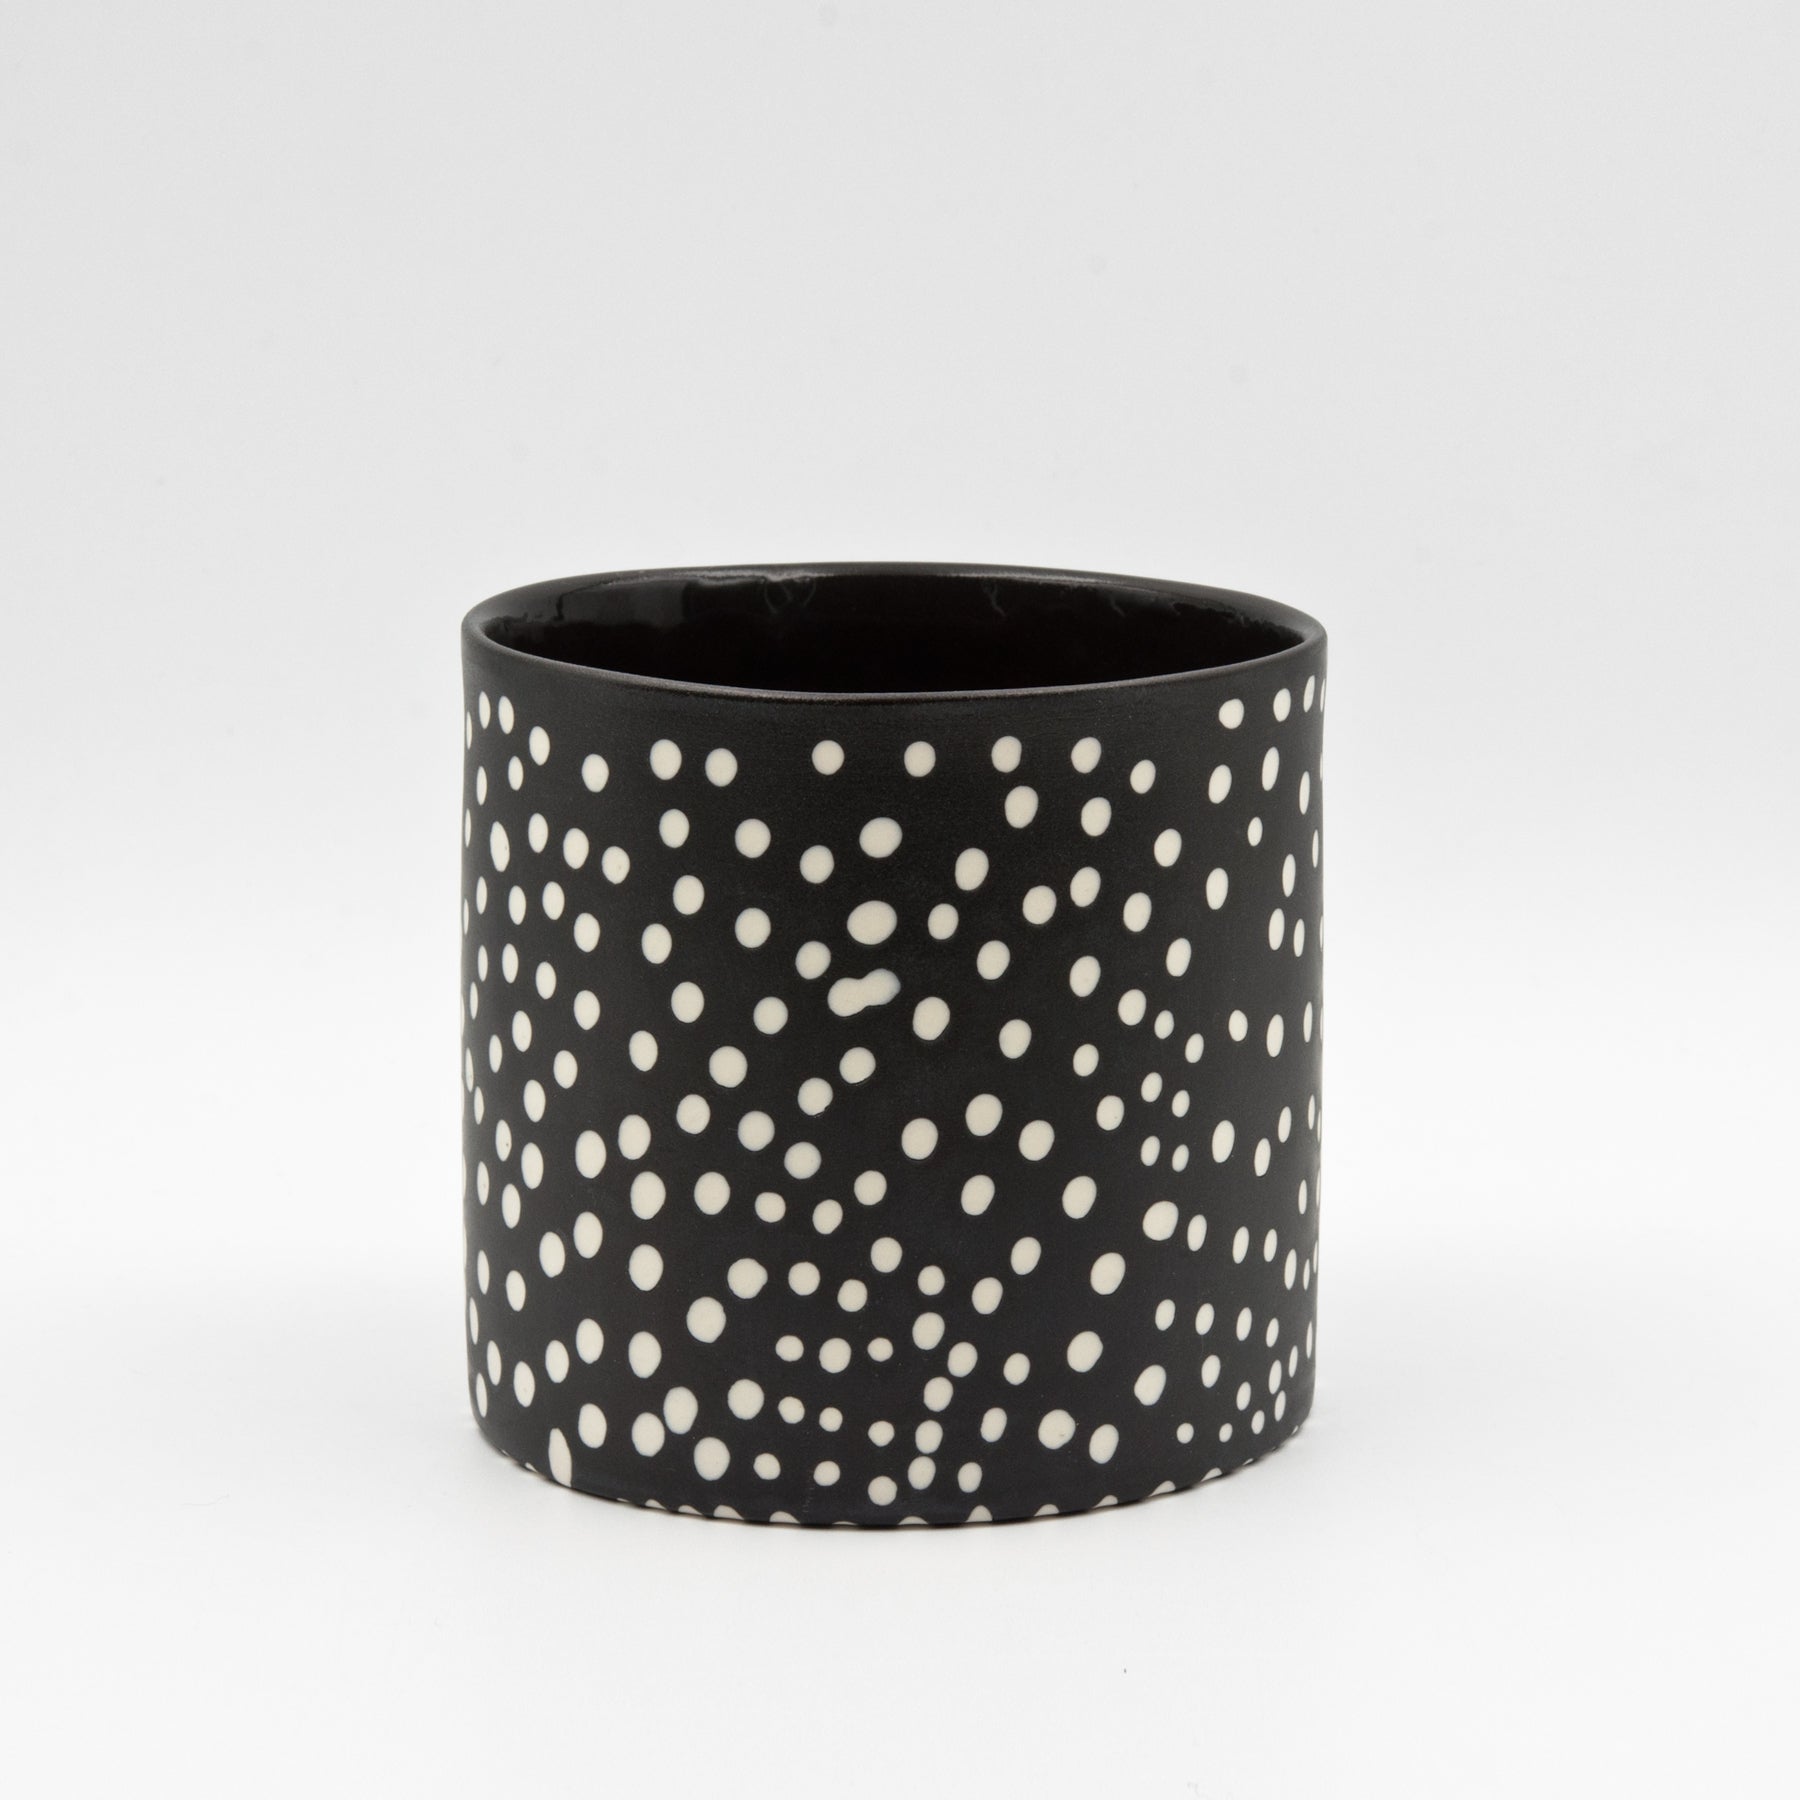 Polka dot cup, black